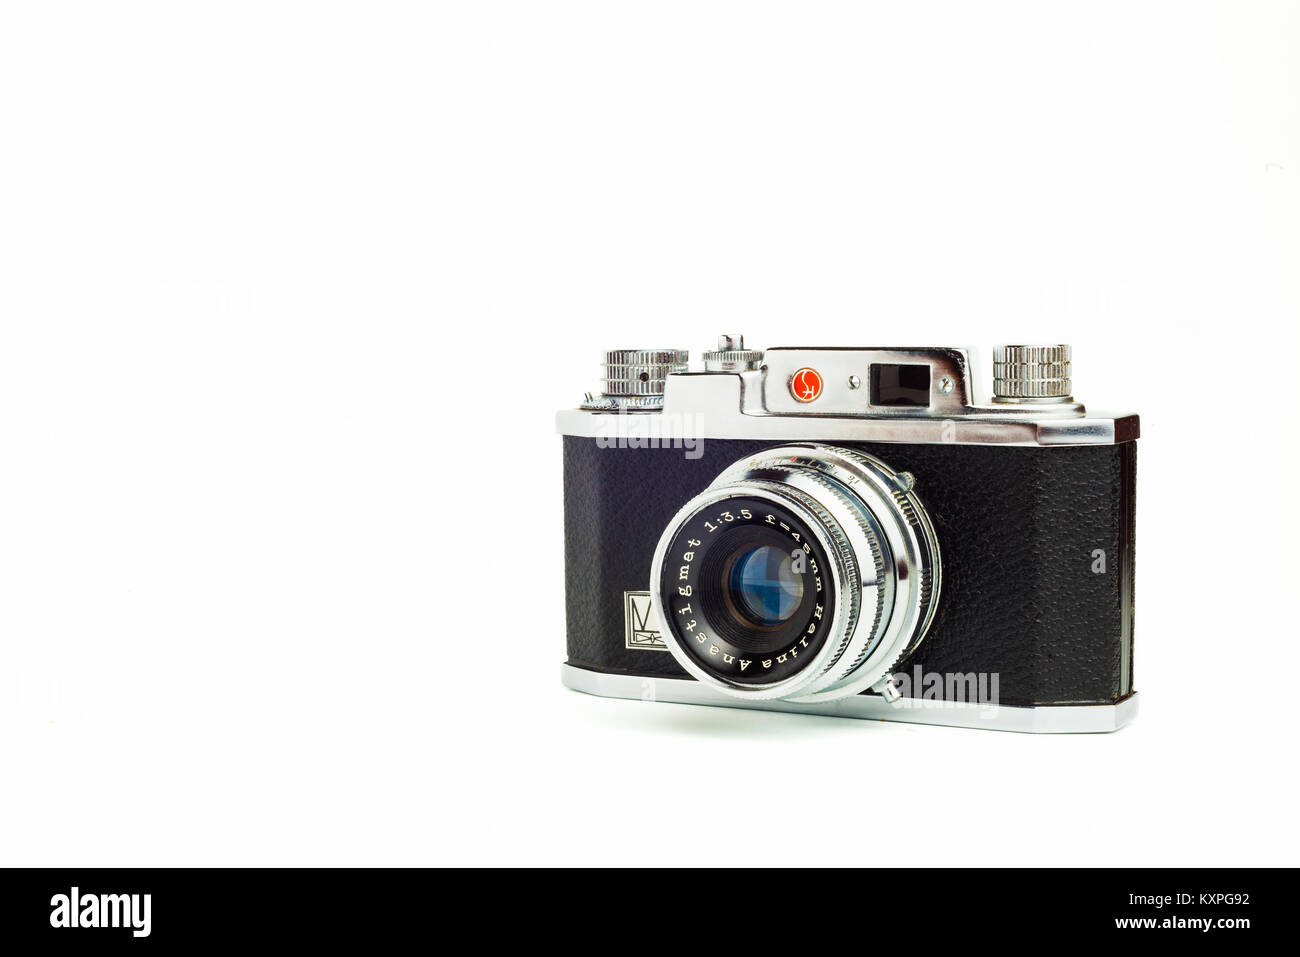 Fotocamera Vintage Halina anastigmat x35 su sfondo bianco Foto Stock